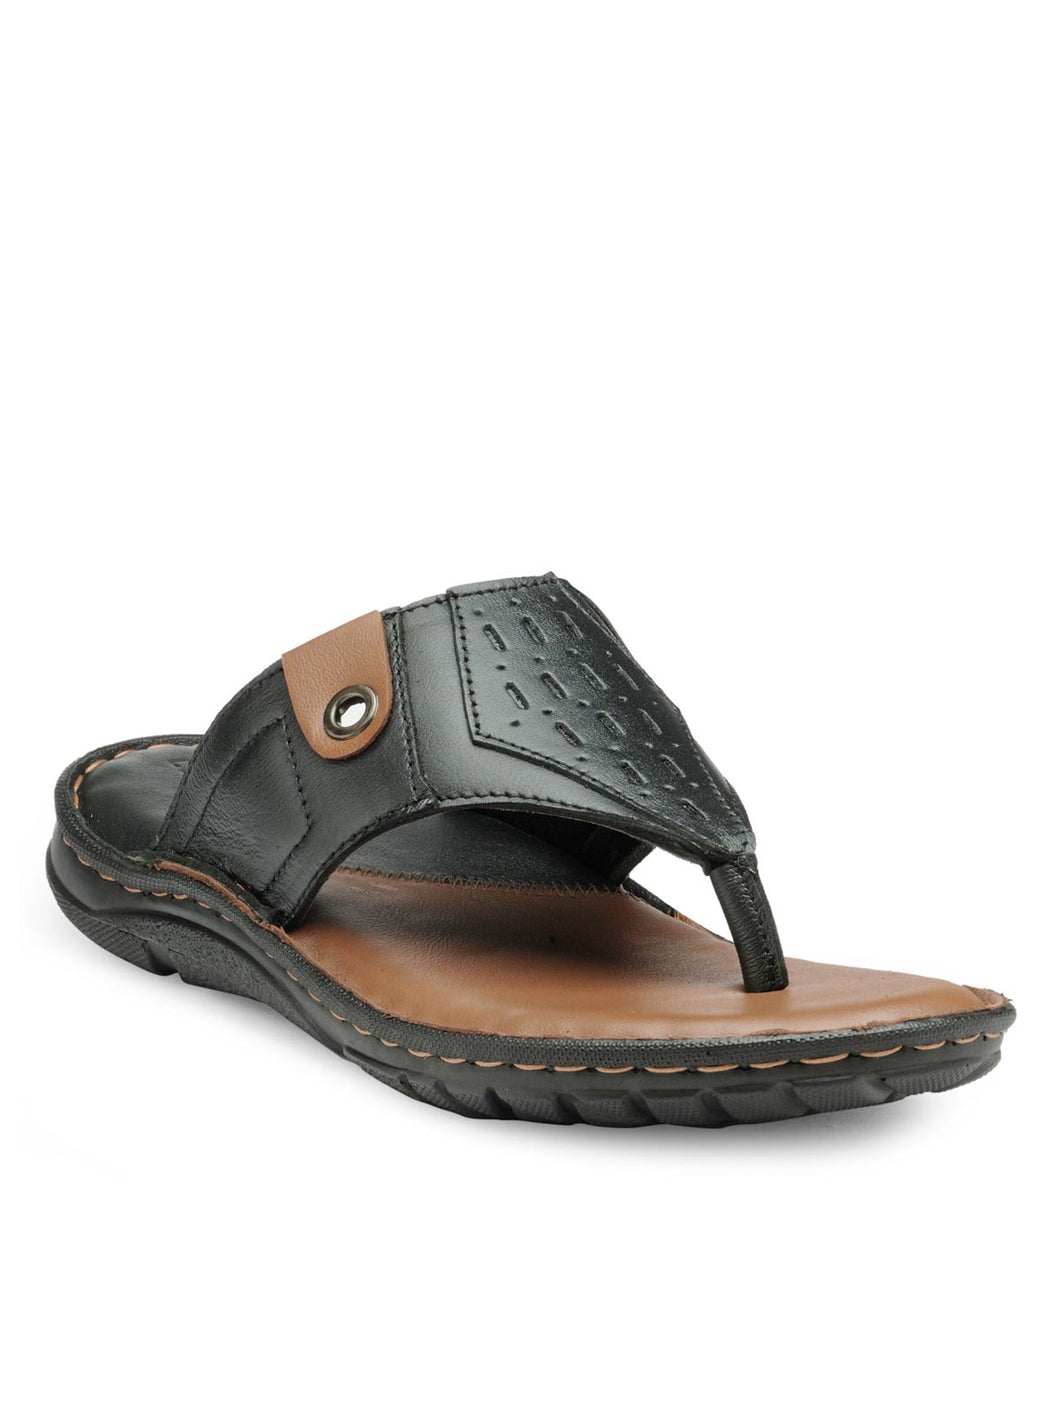 Teakwood Men's Leather Outdoor Slippers & Sandals Footwear